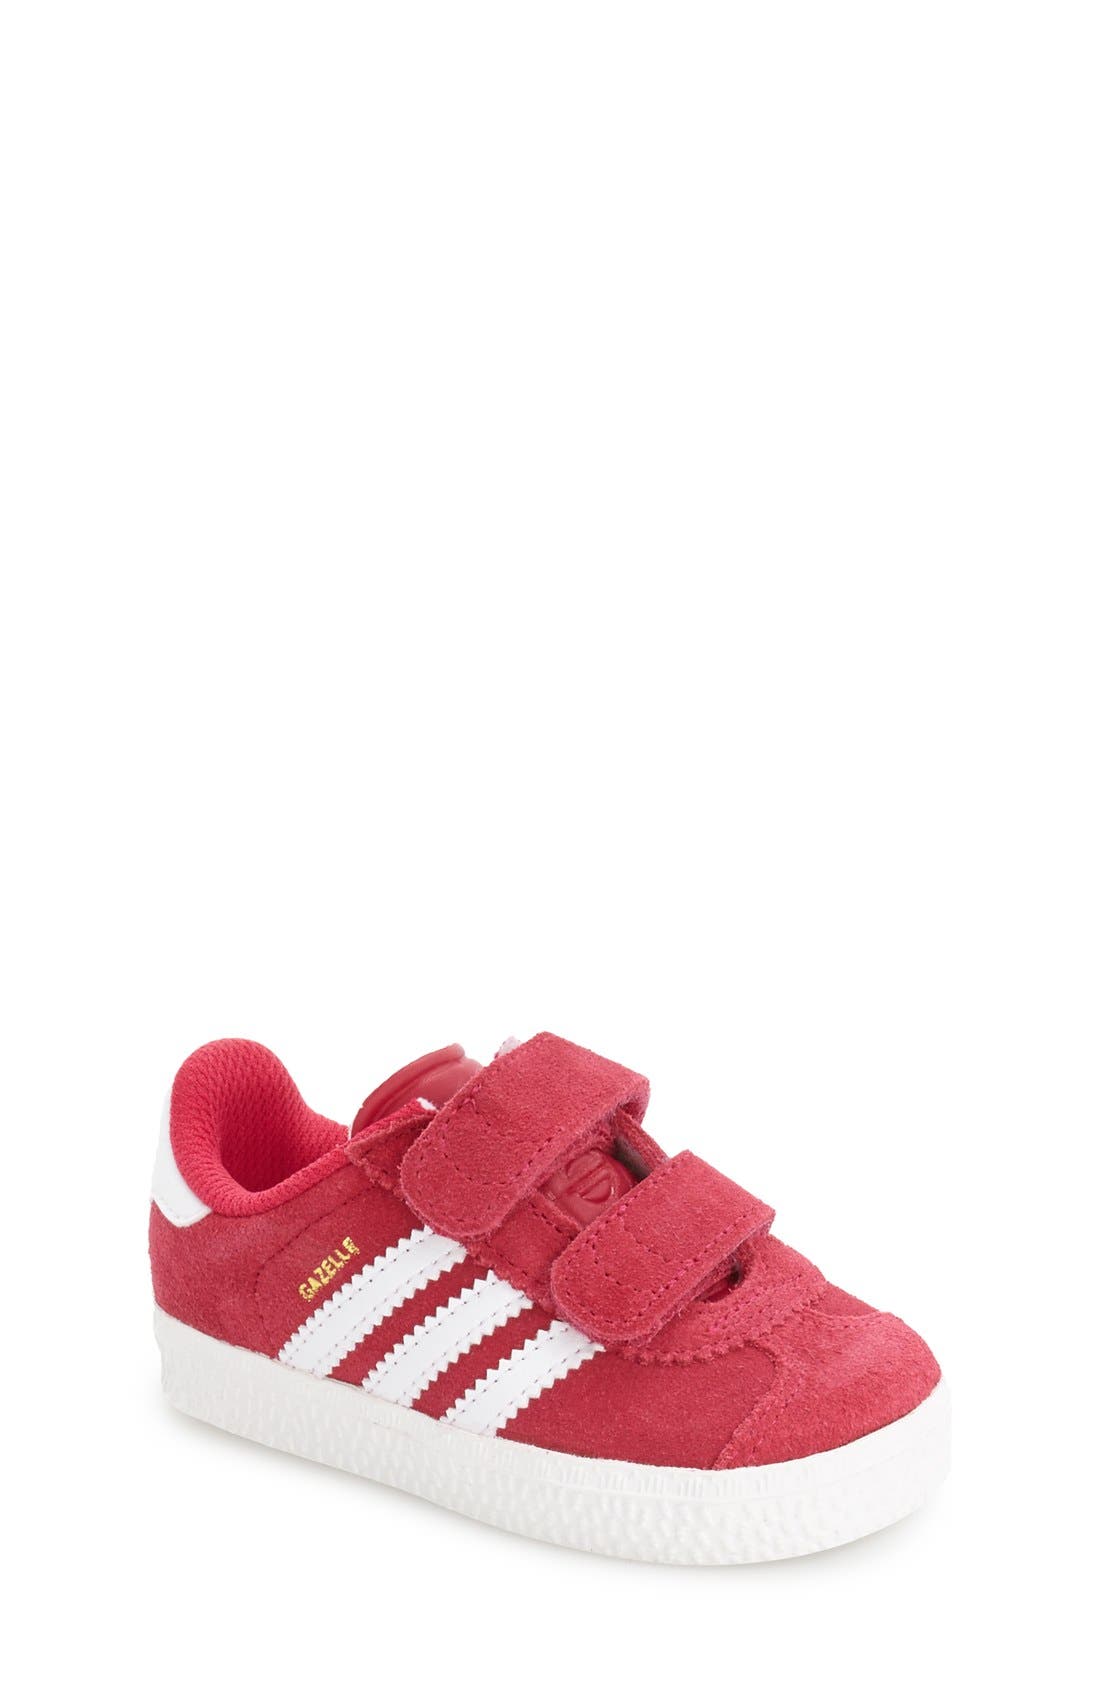 adidas gazelle sneaker toddler